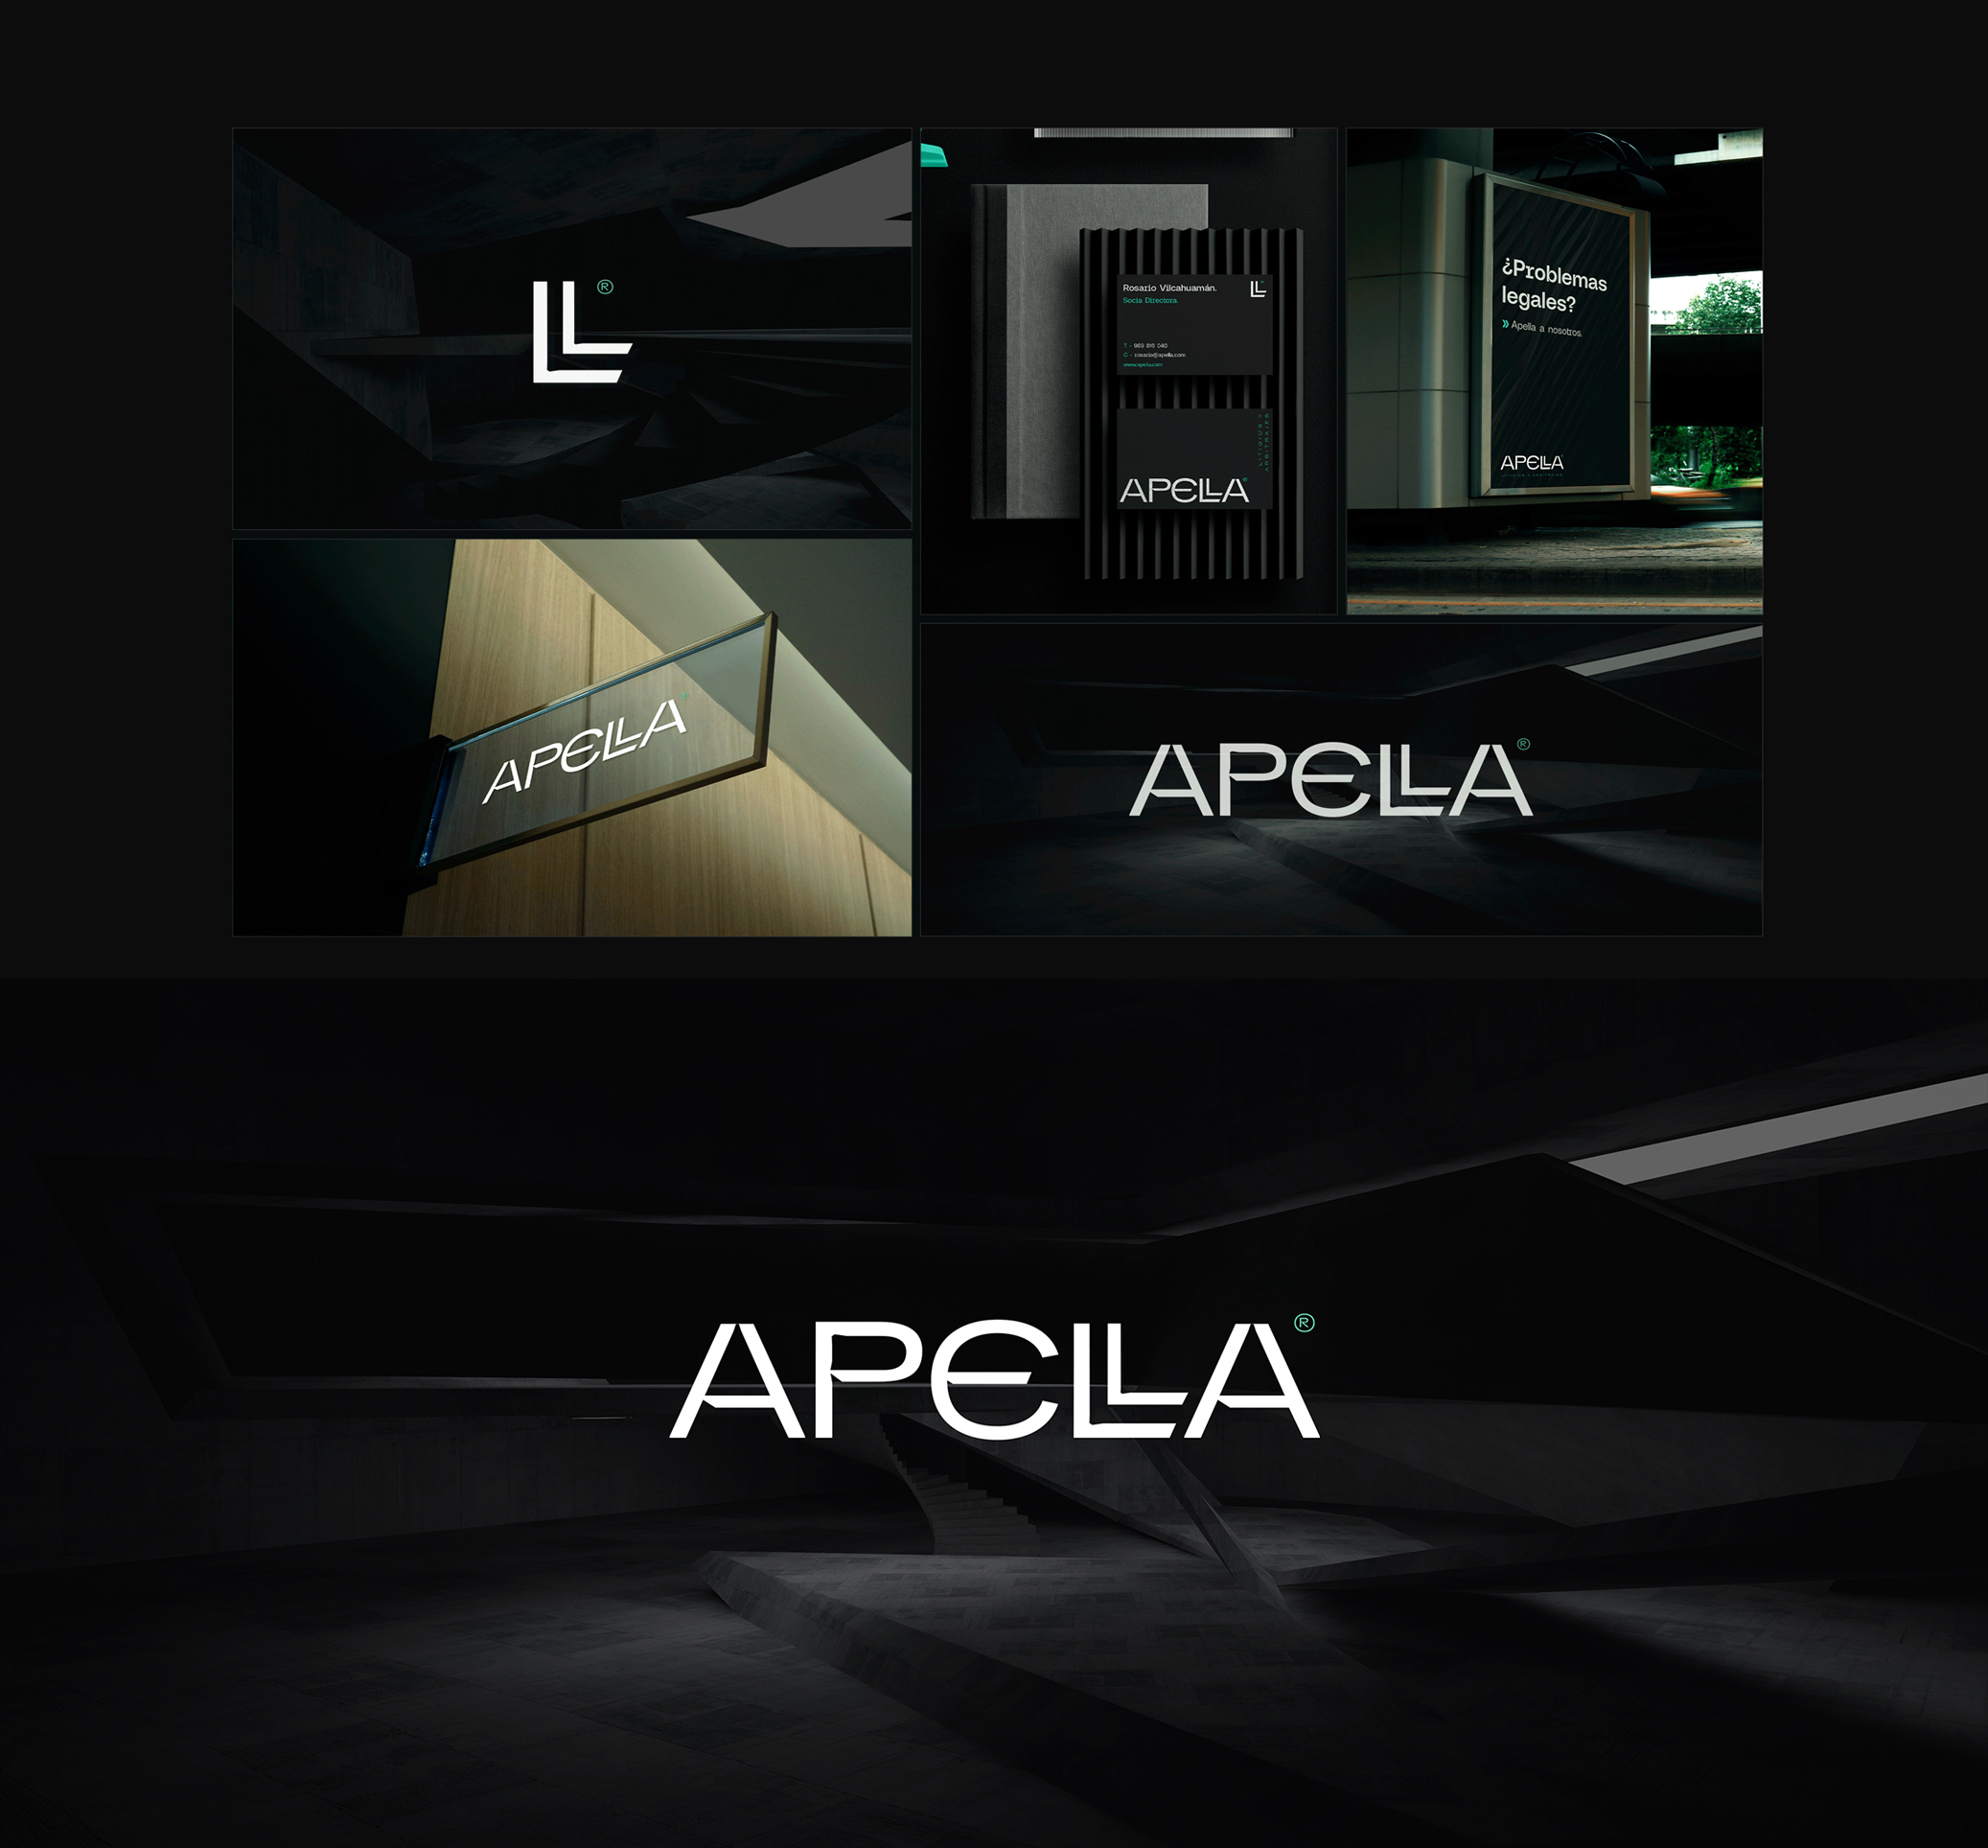 Apella Law Firm Brand Identity Concept